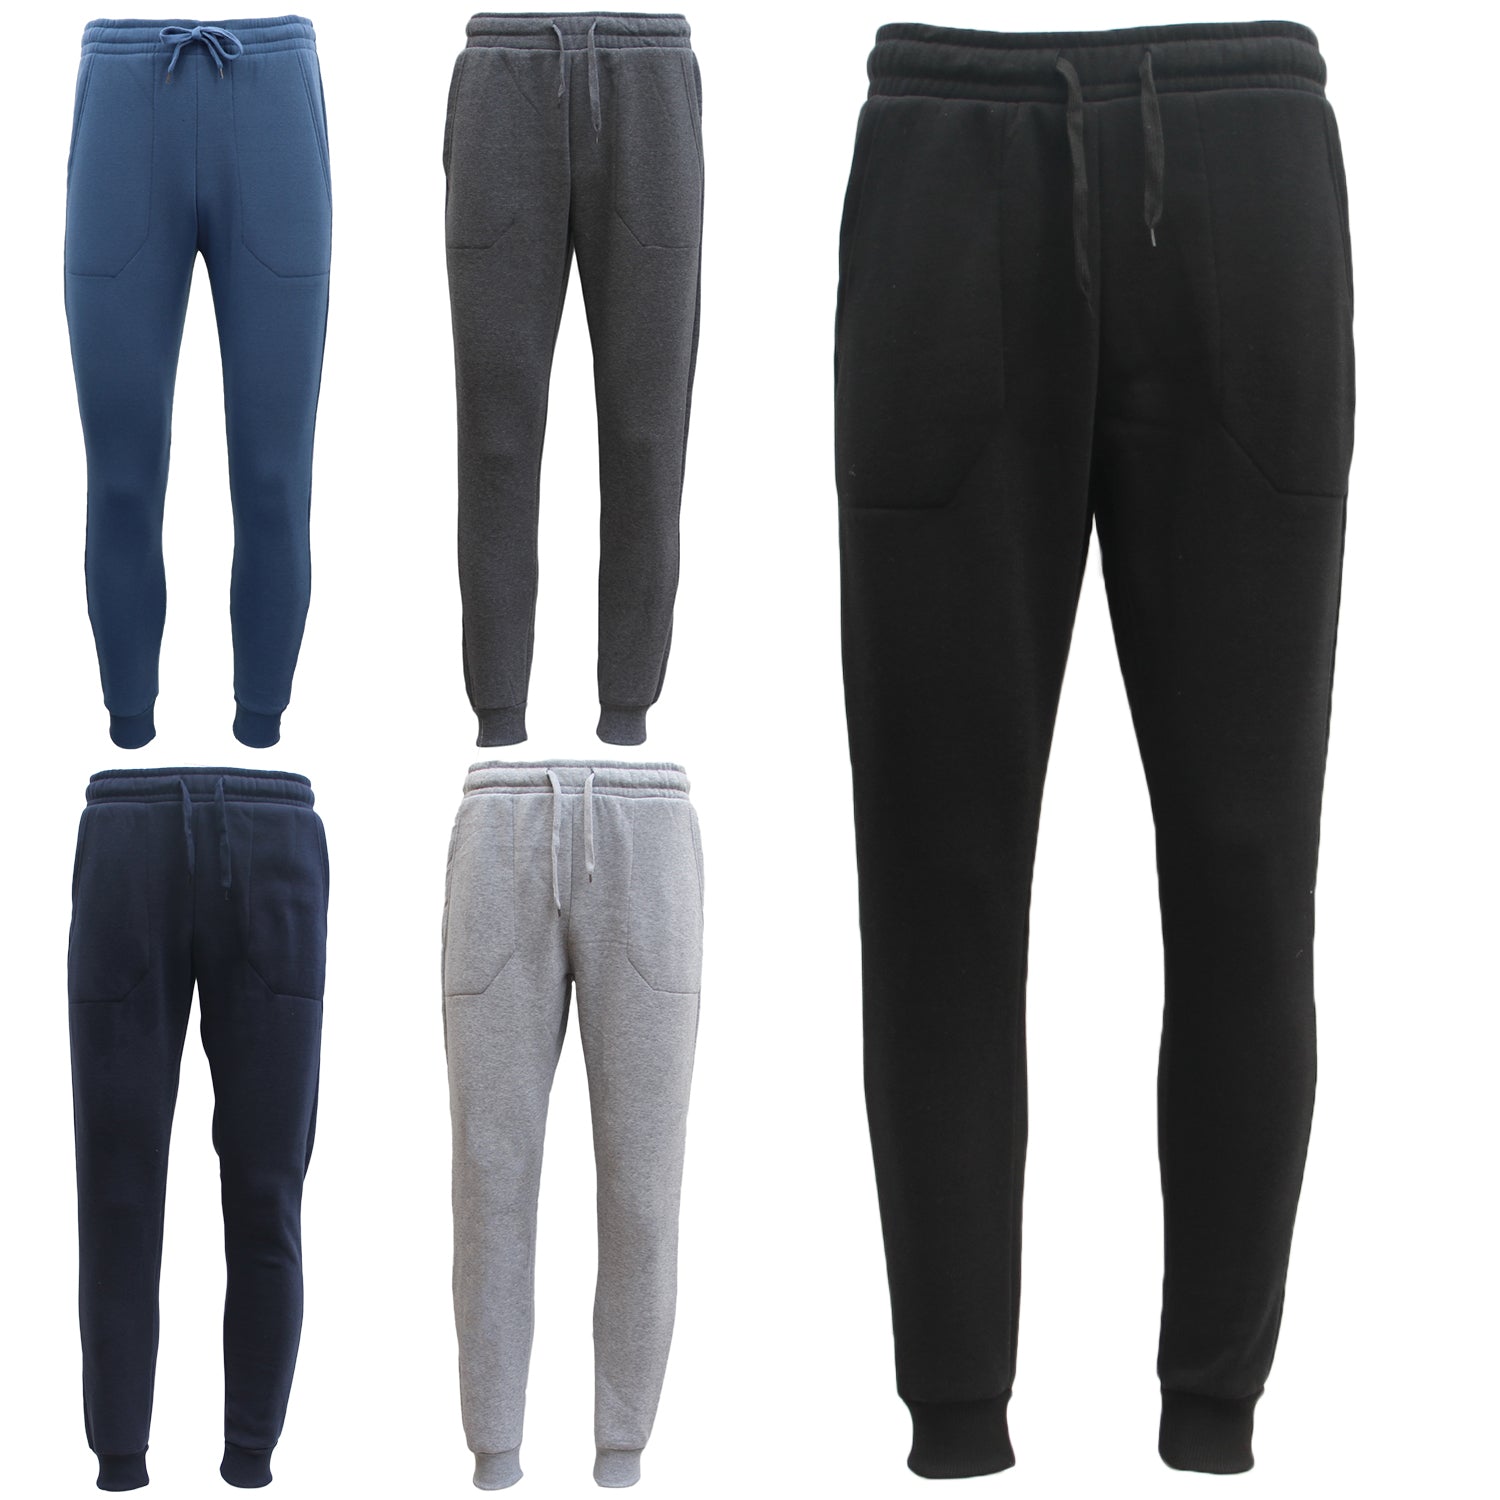 Mens Unisex Fleece Lined Sweat Track Pants Suit Casual Trackies Slim Cuff XS-6XL, Dark Grey, M